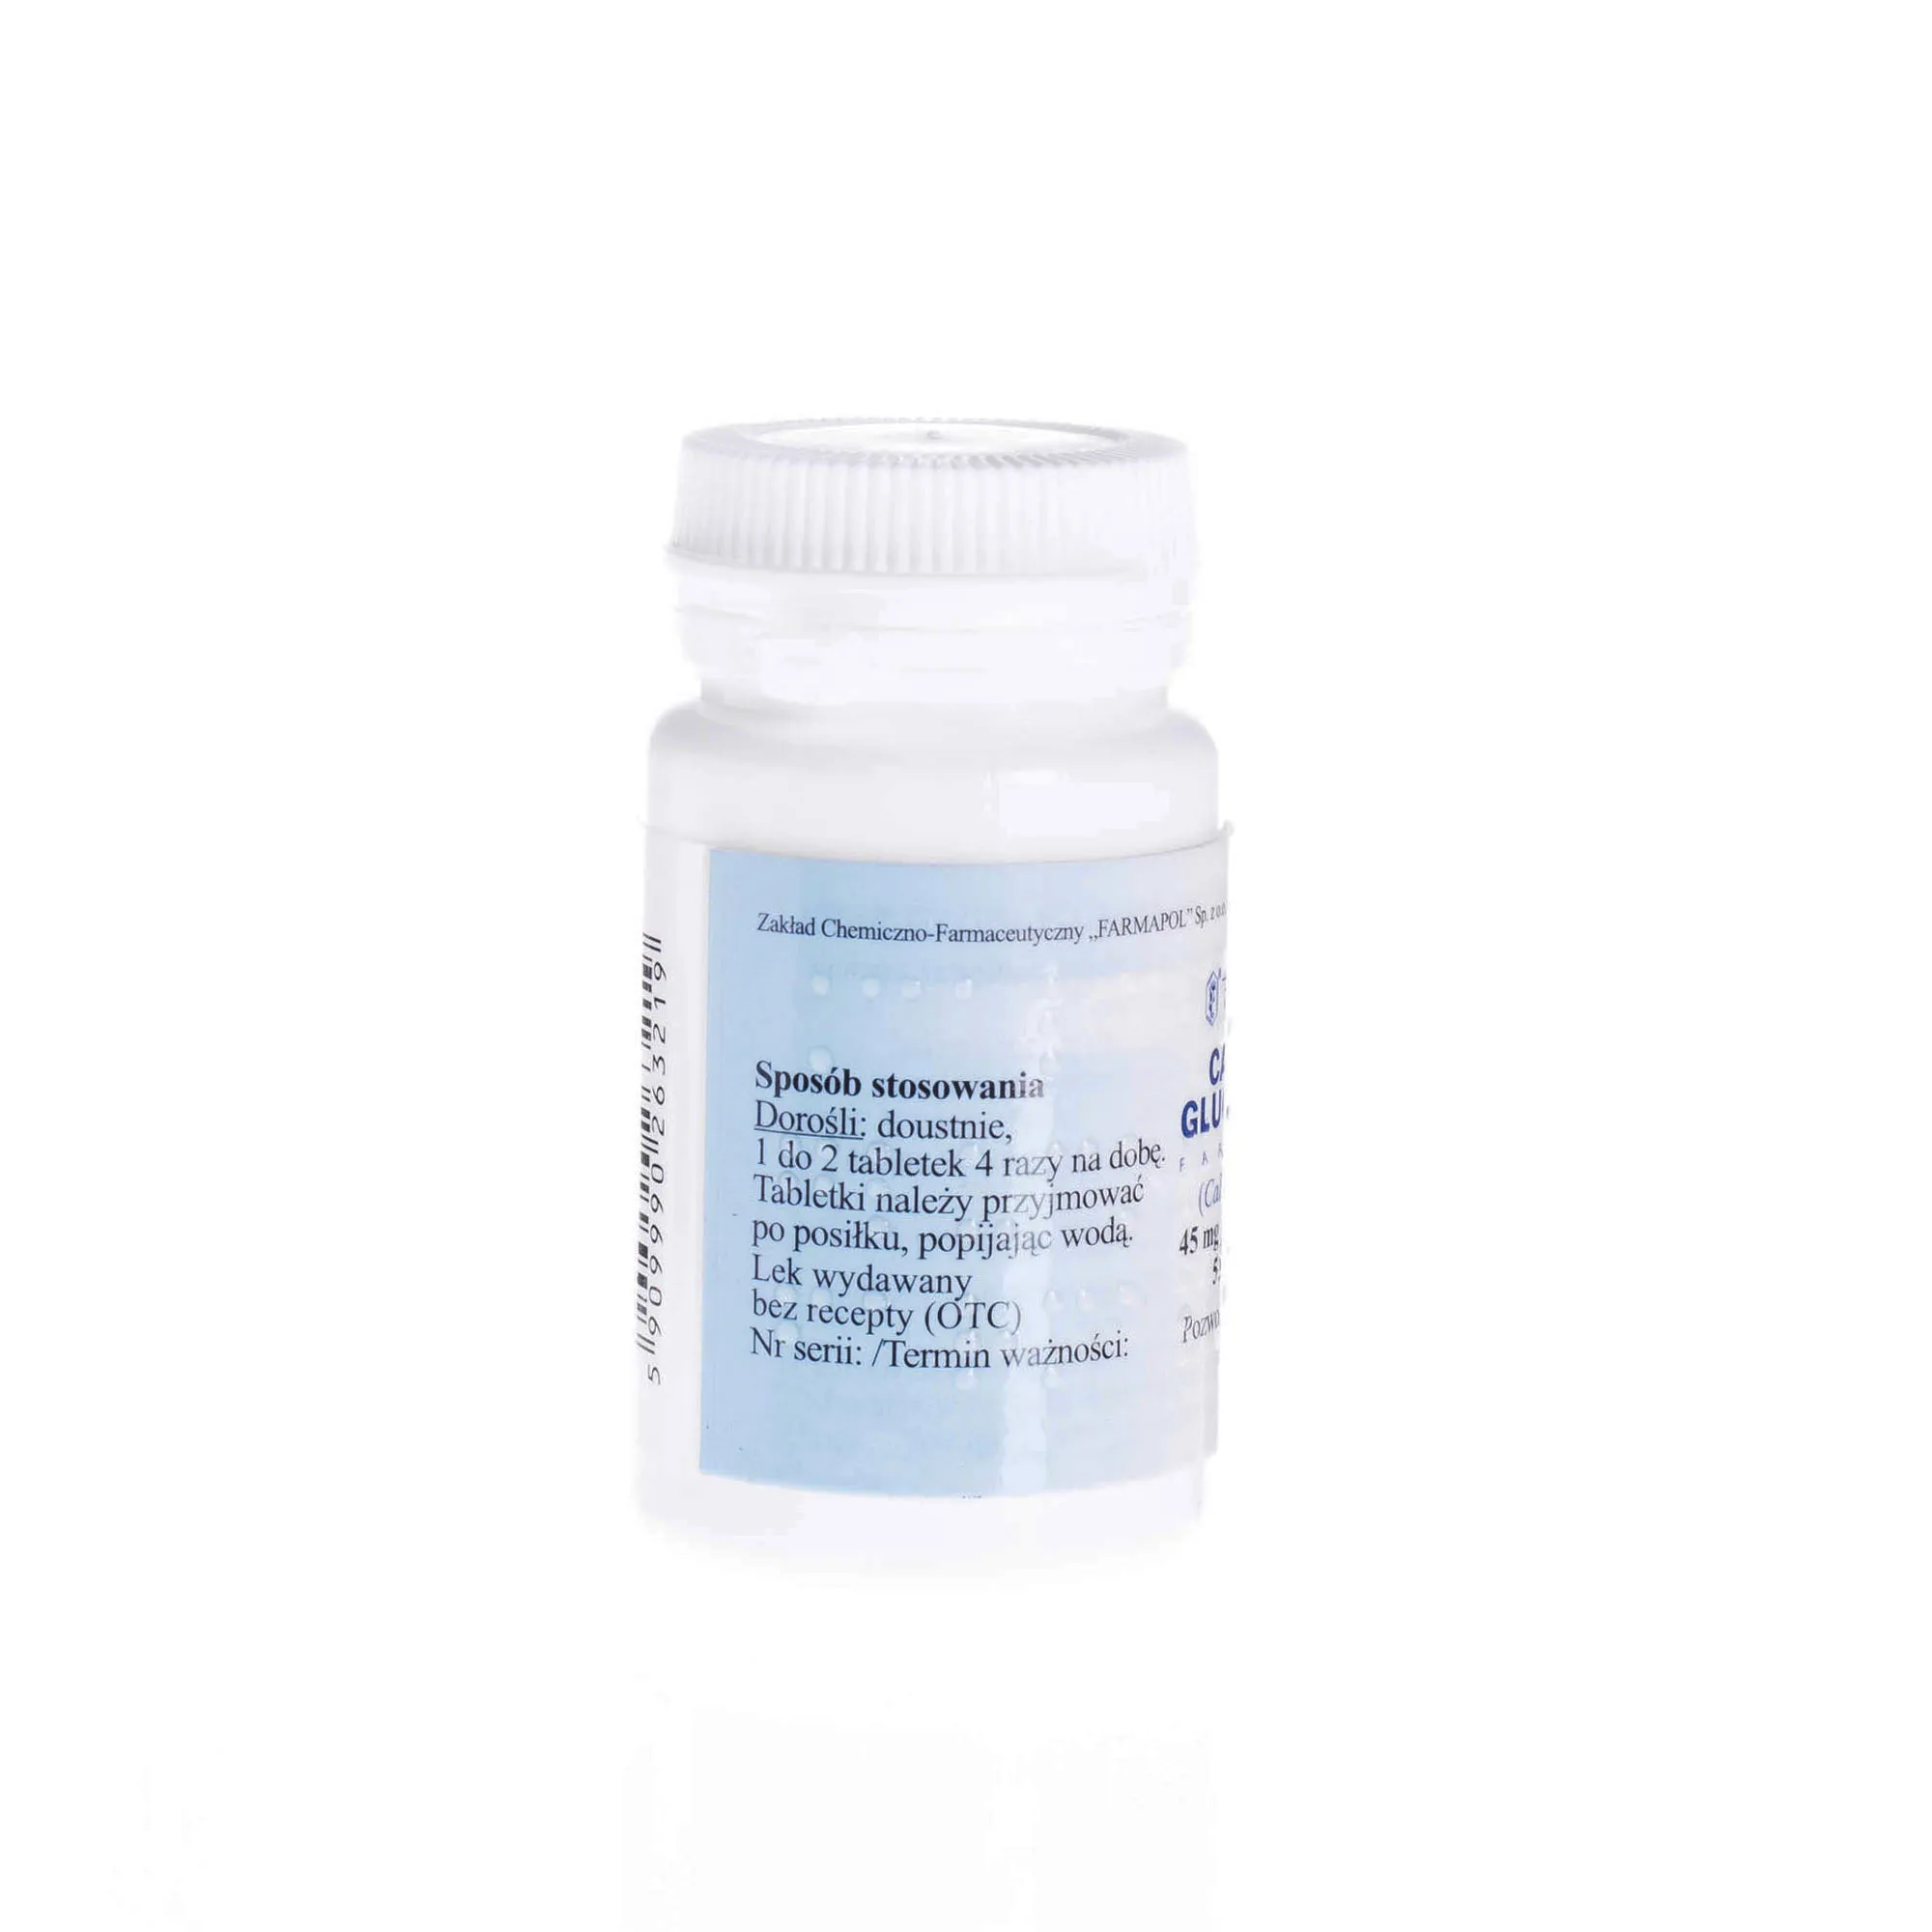 Calcium Gluconium Farmapol, 45 mg jonów wapnia, 50 tabletek 